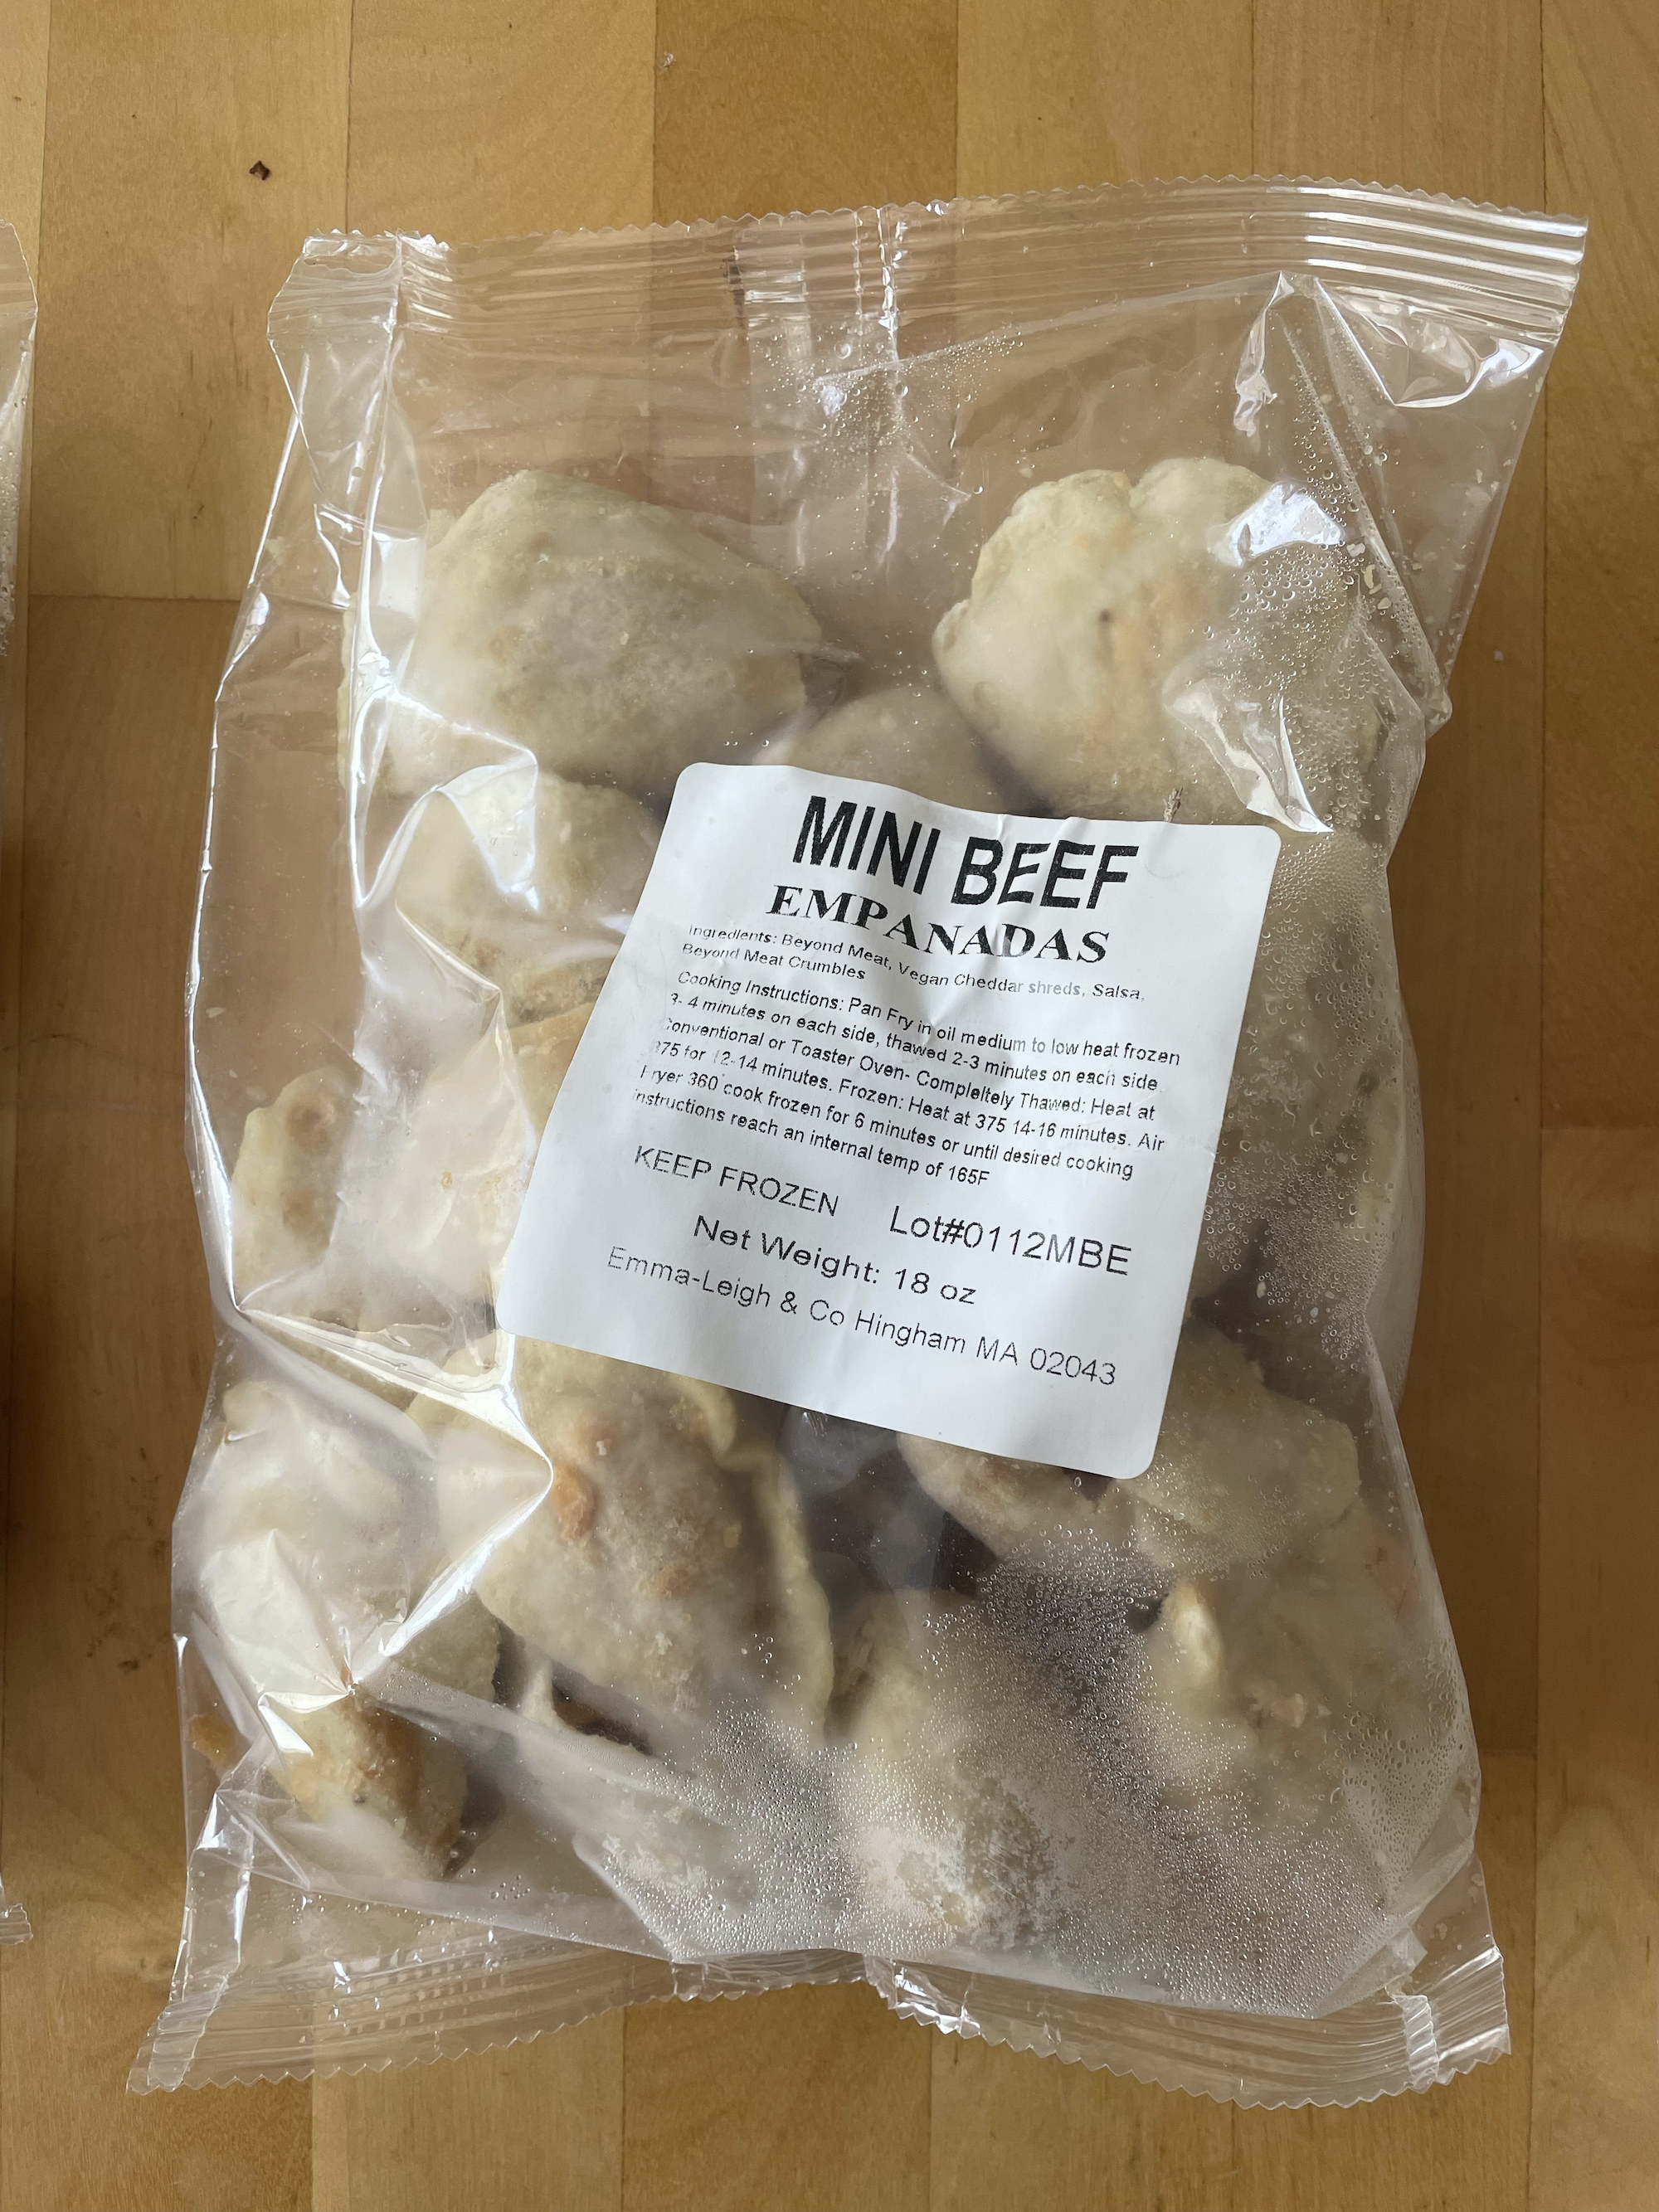 A package of mini beef empanadas